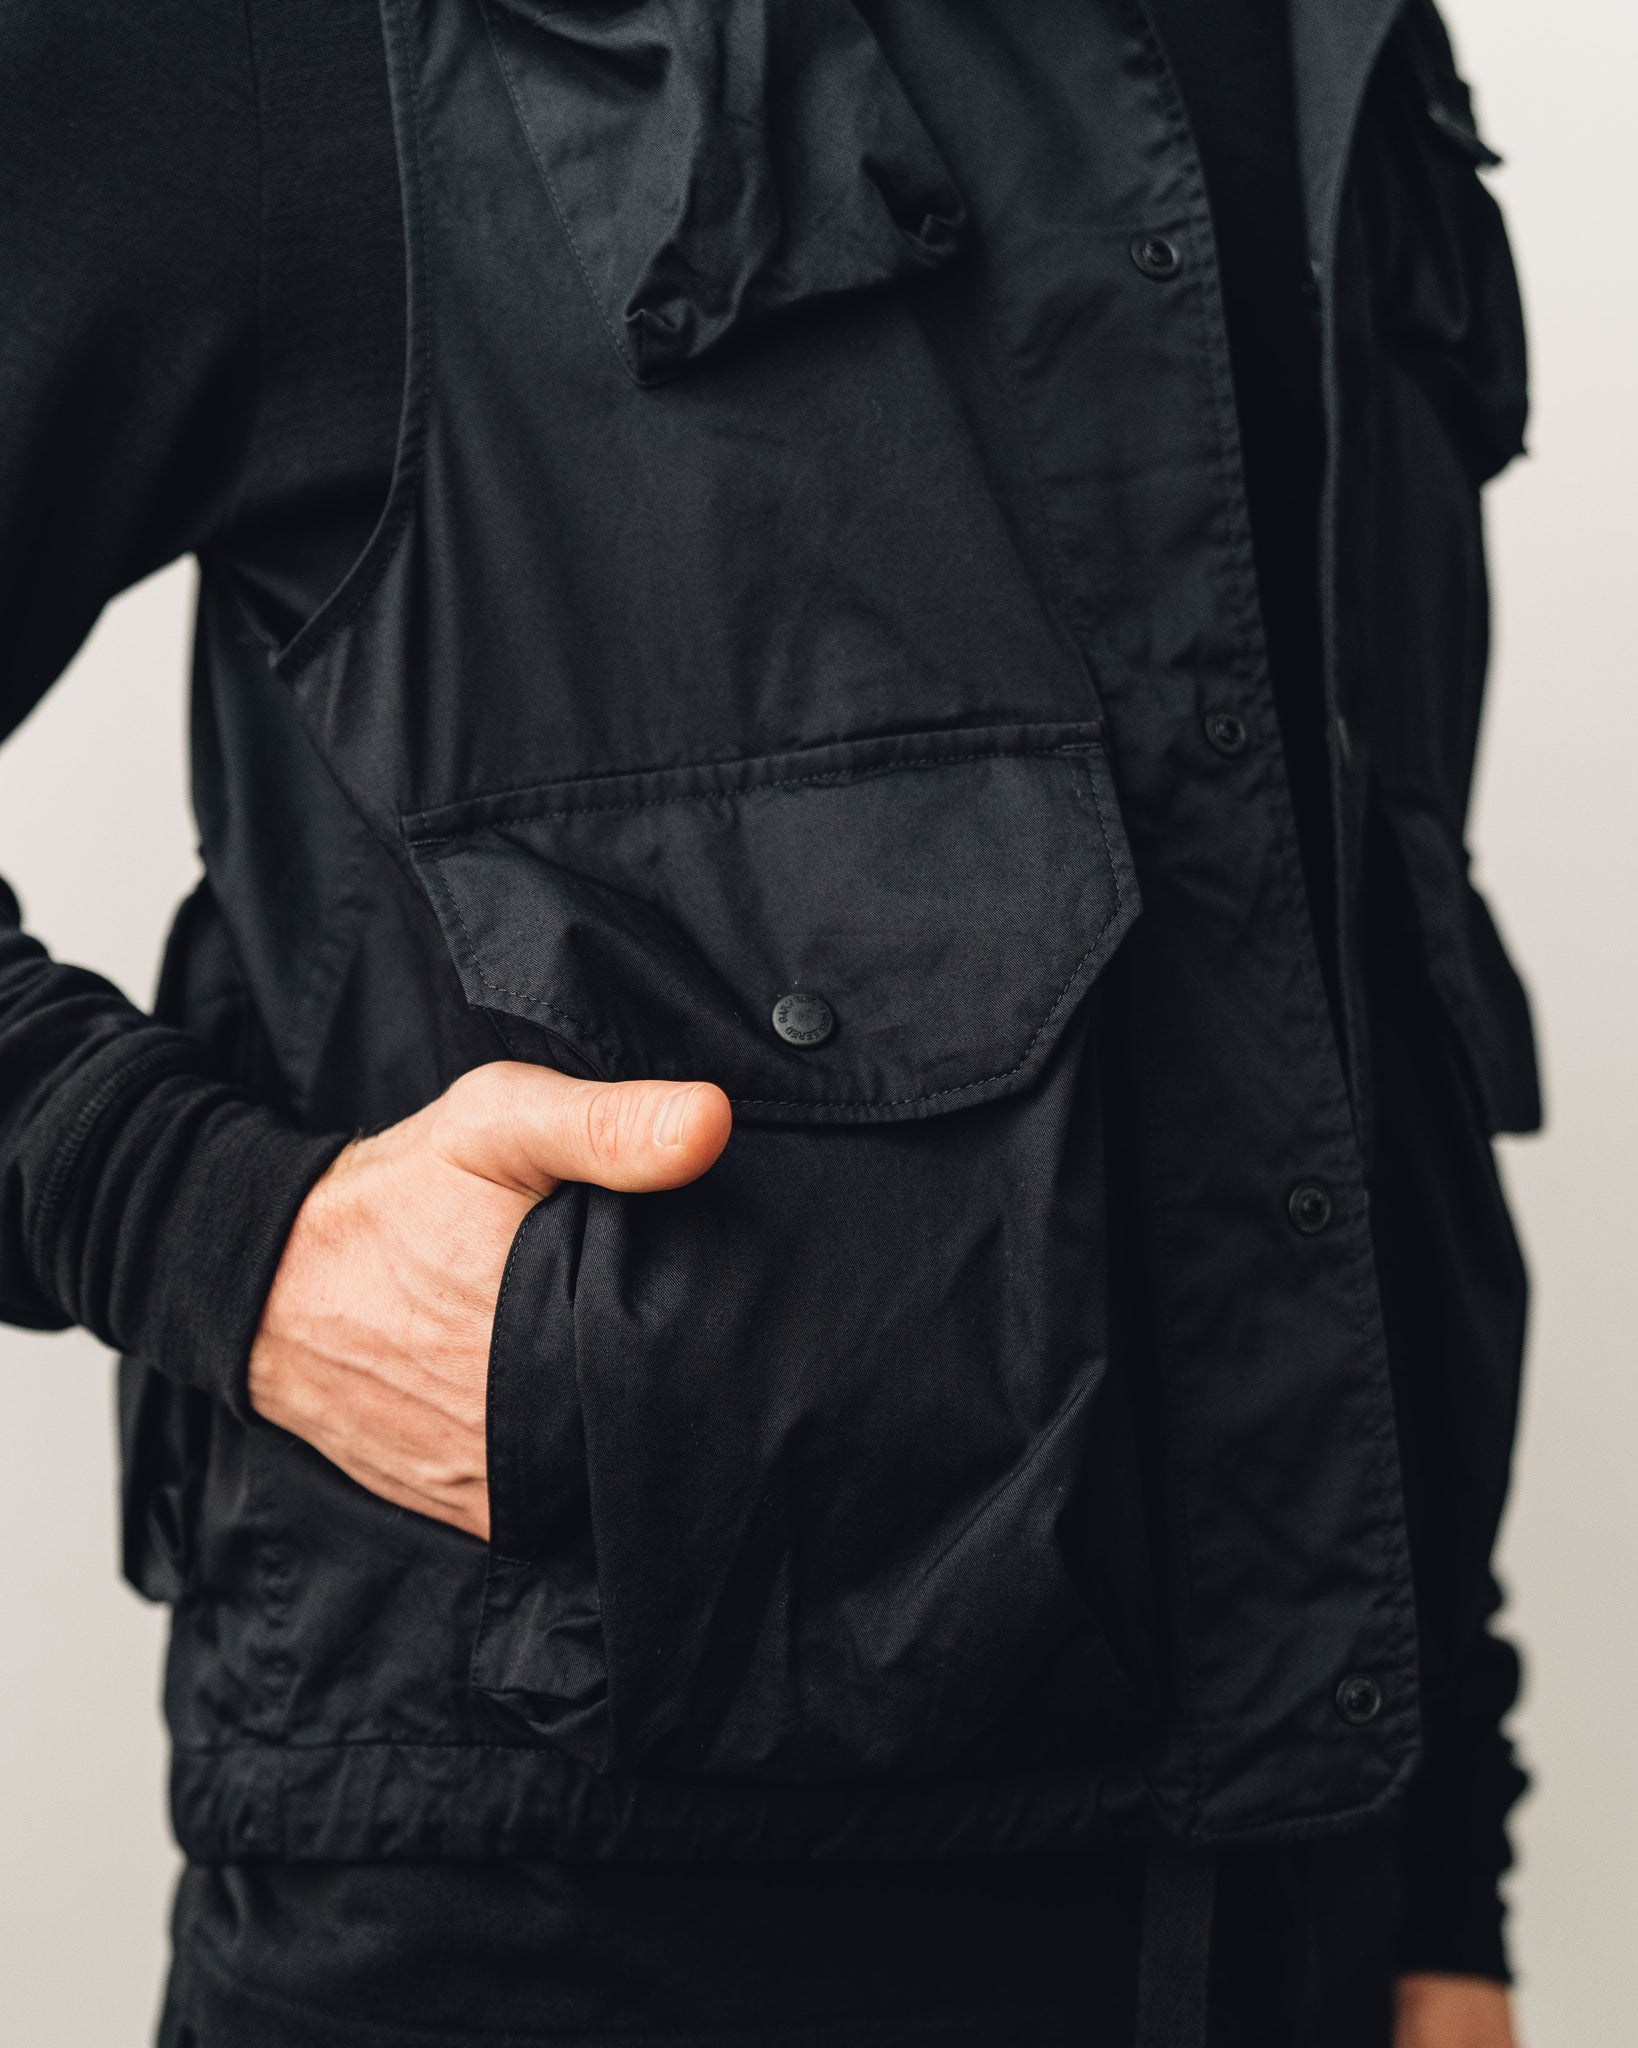 Engineered Garments Ripstop Field Vest, Black